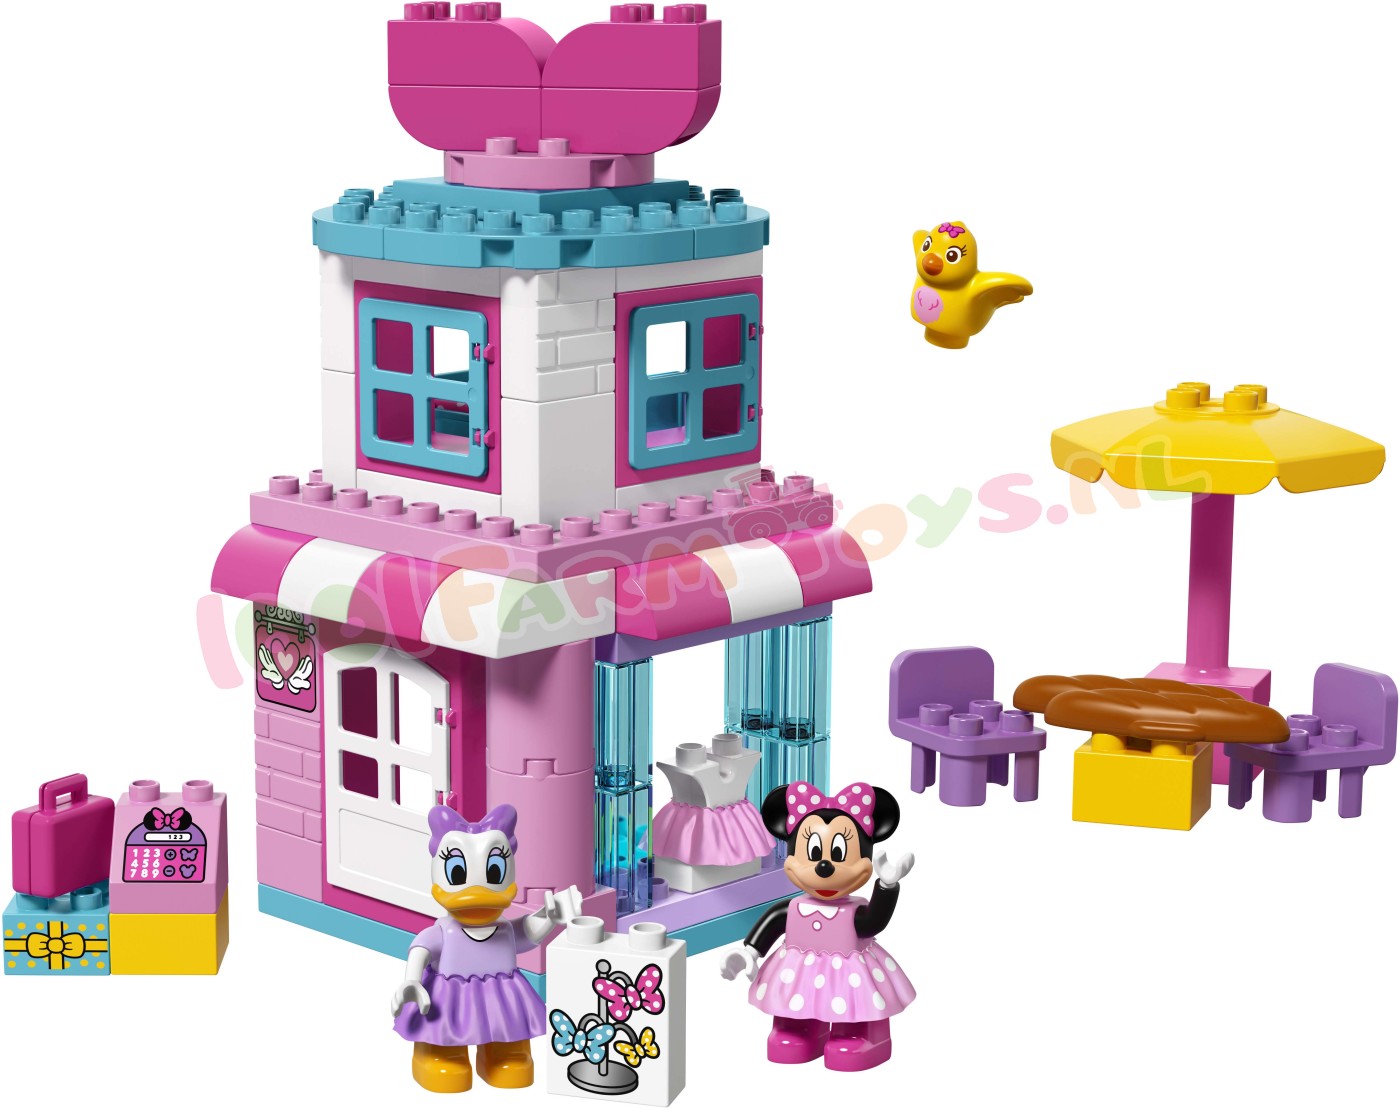 Ga trouwen komen Afleiden LEGO DUPLO MINNIE MOUSE BOW-TIQUE - 10844 - Uitverkocht Farm - 1001Farmtoys  landbouwspeelgoed - Kleine fans van Disneys Minnie Mouse zullen veel plezier